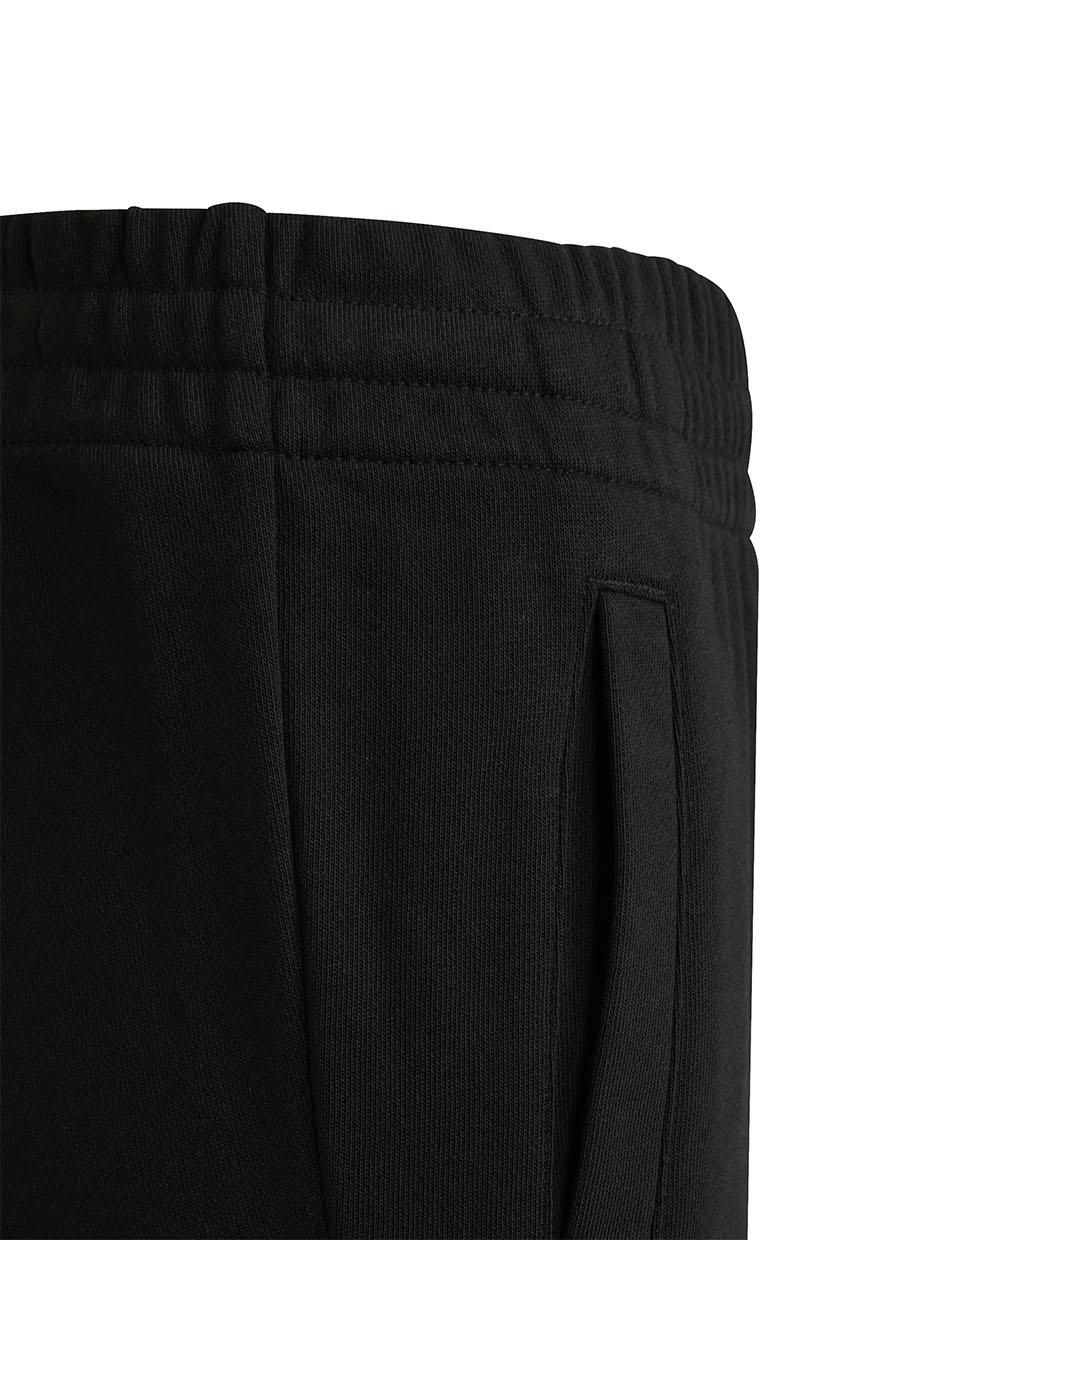 Pantalón Unisex adidas Logo Negro/Blanco